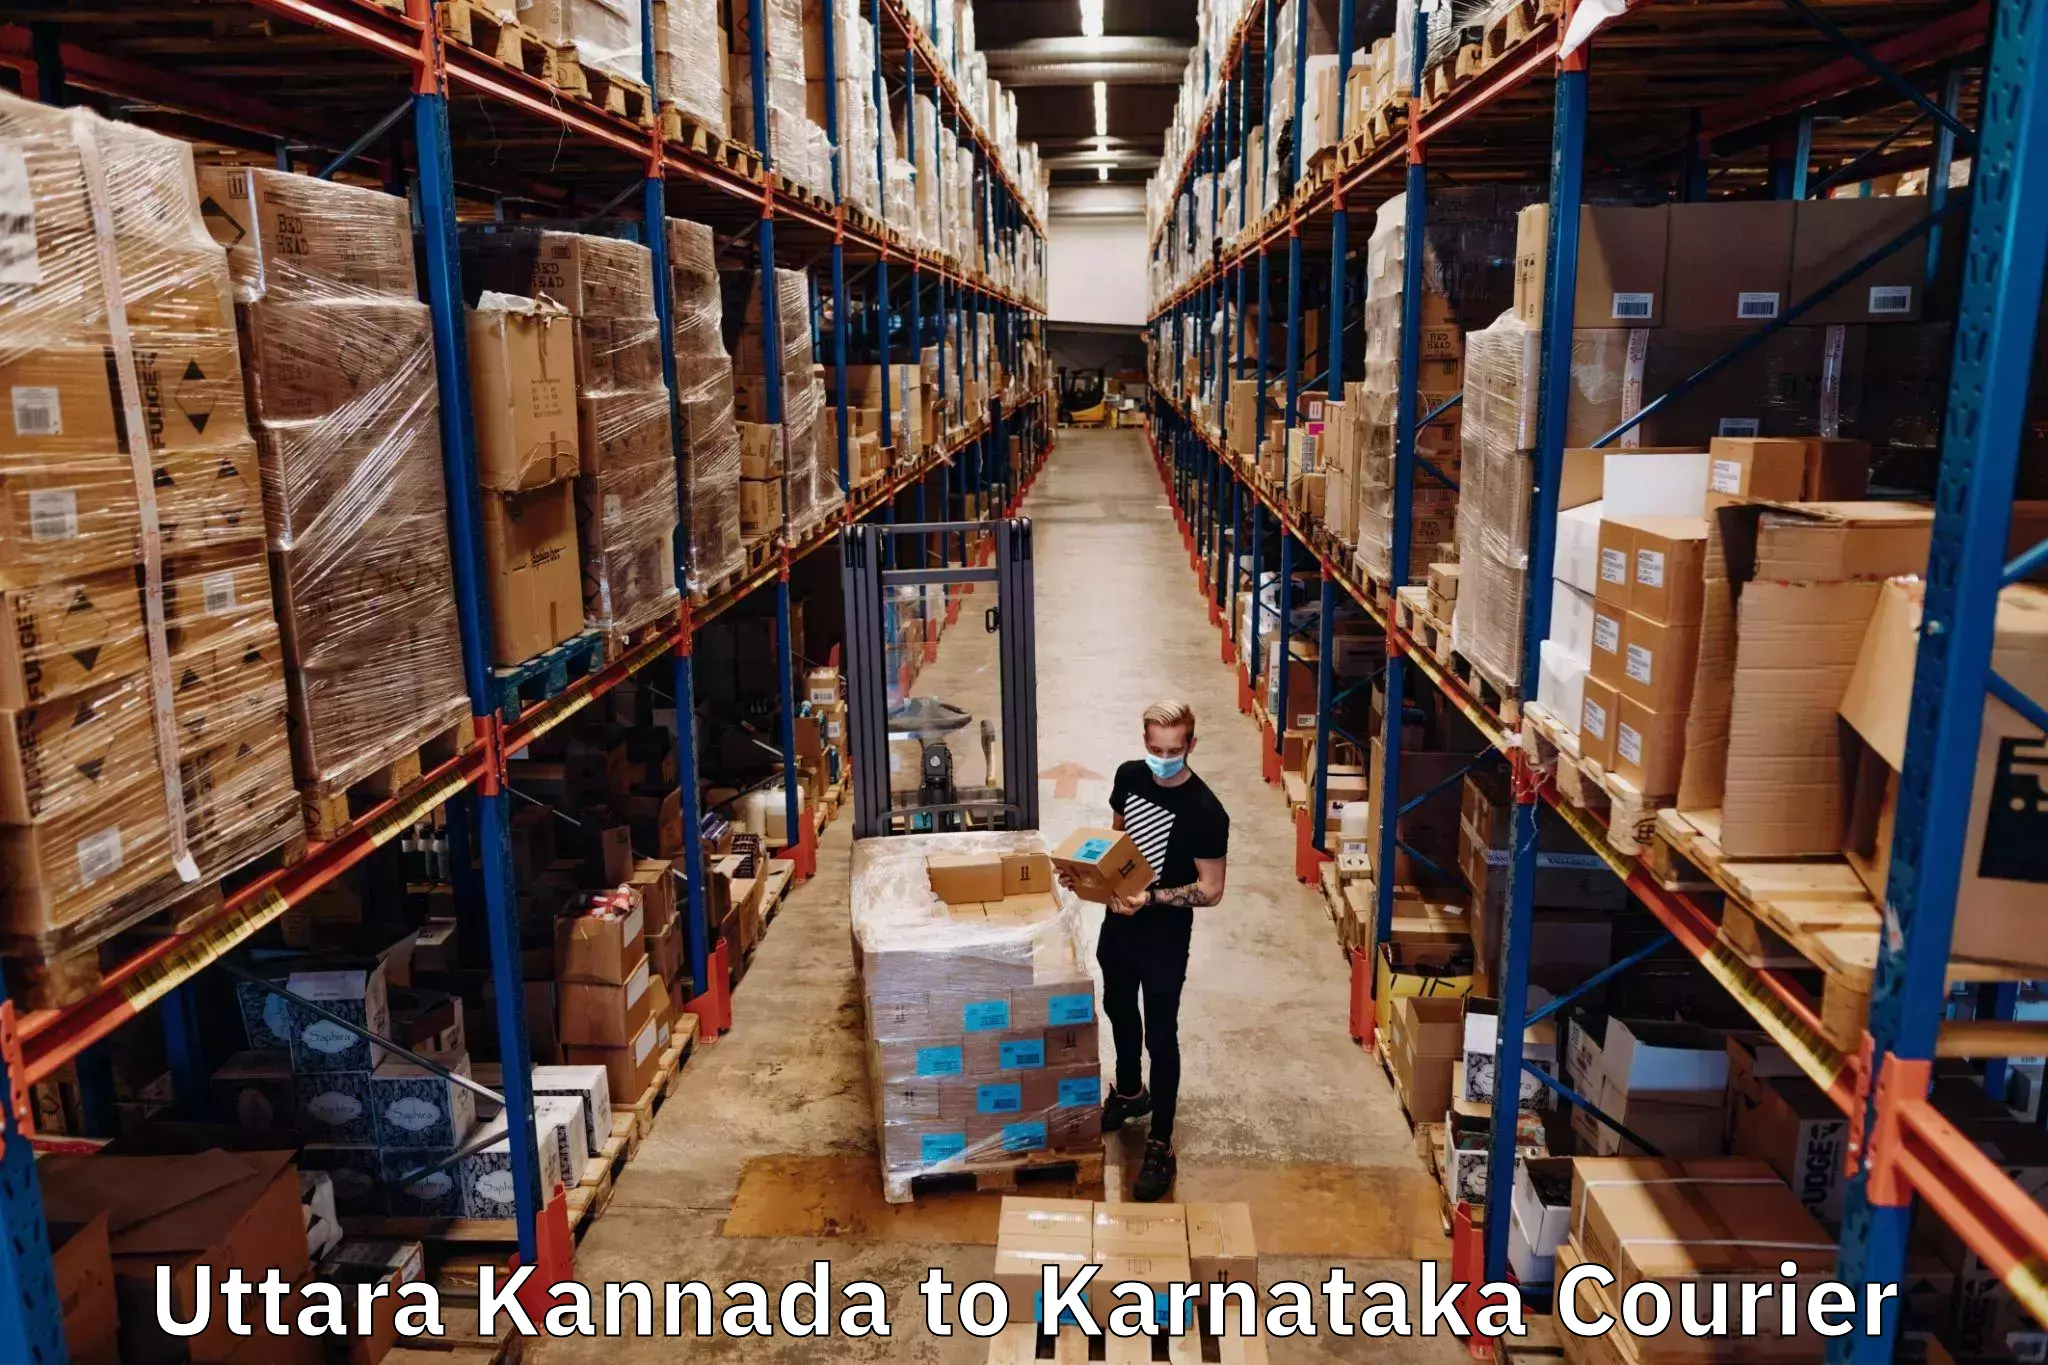 Customizable delivery plans Uttara Kannada to Yellapur